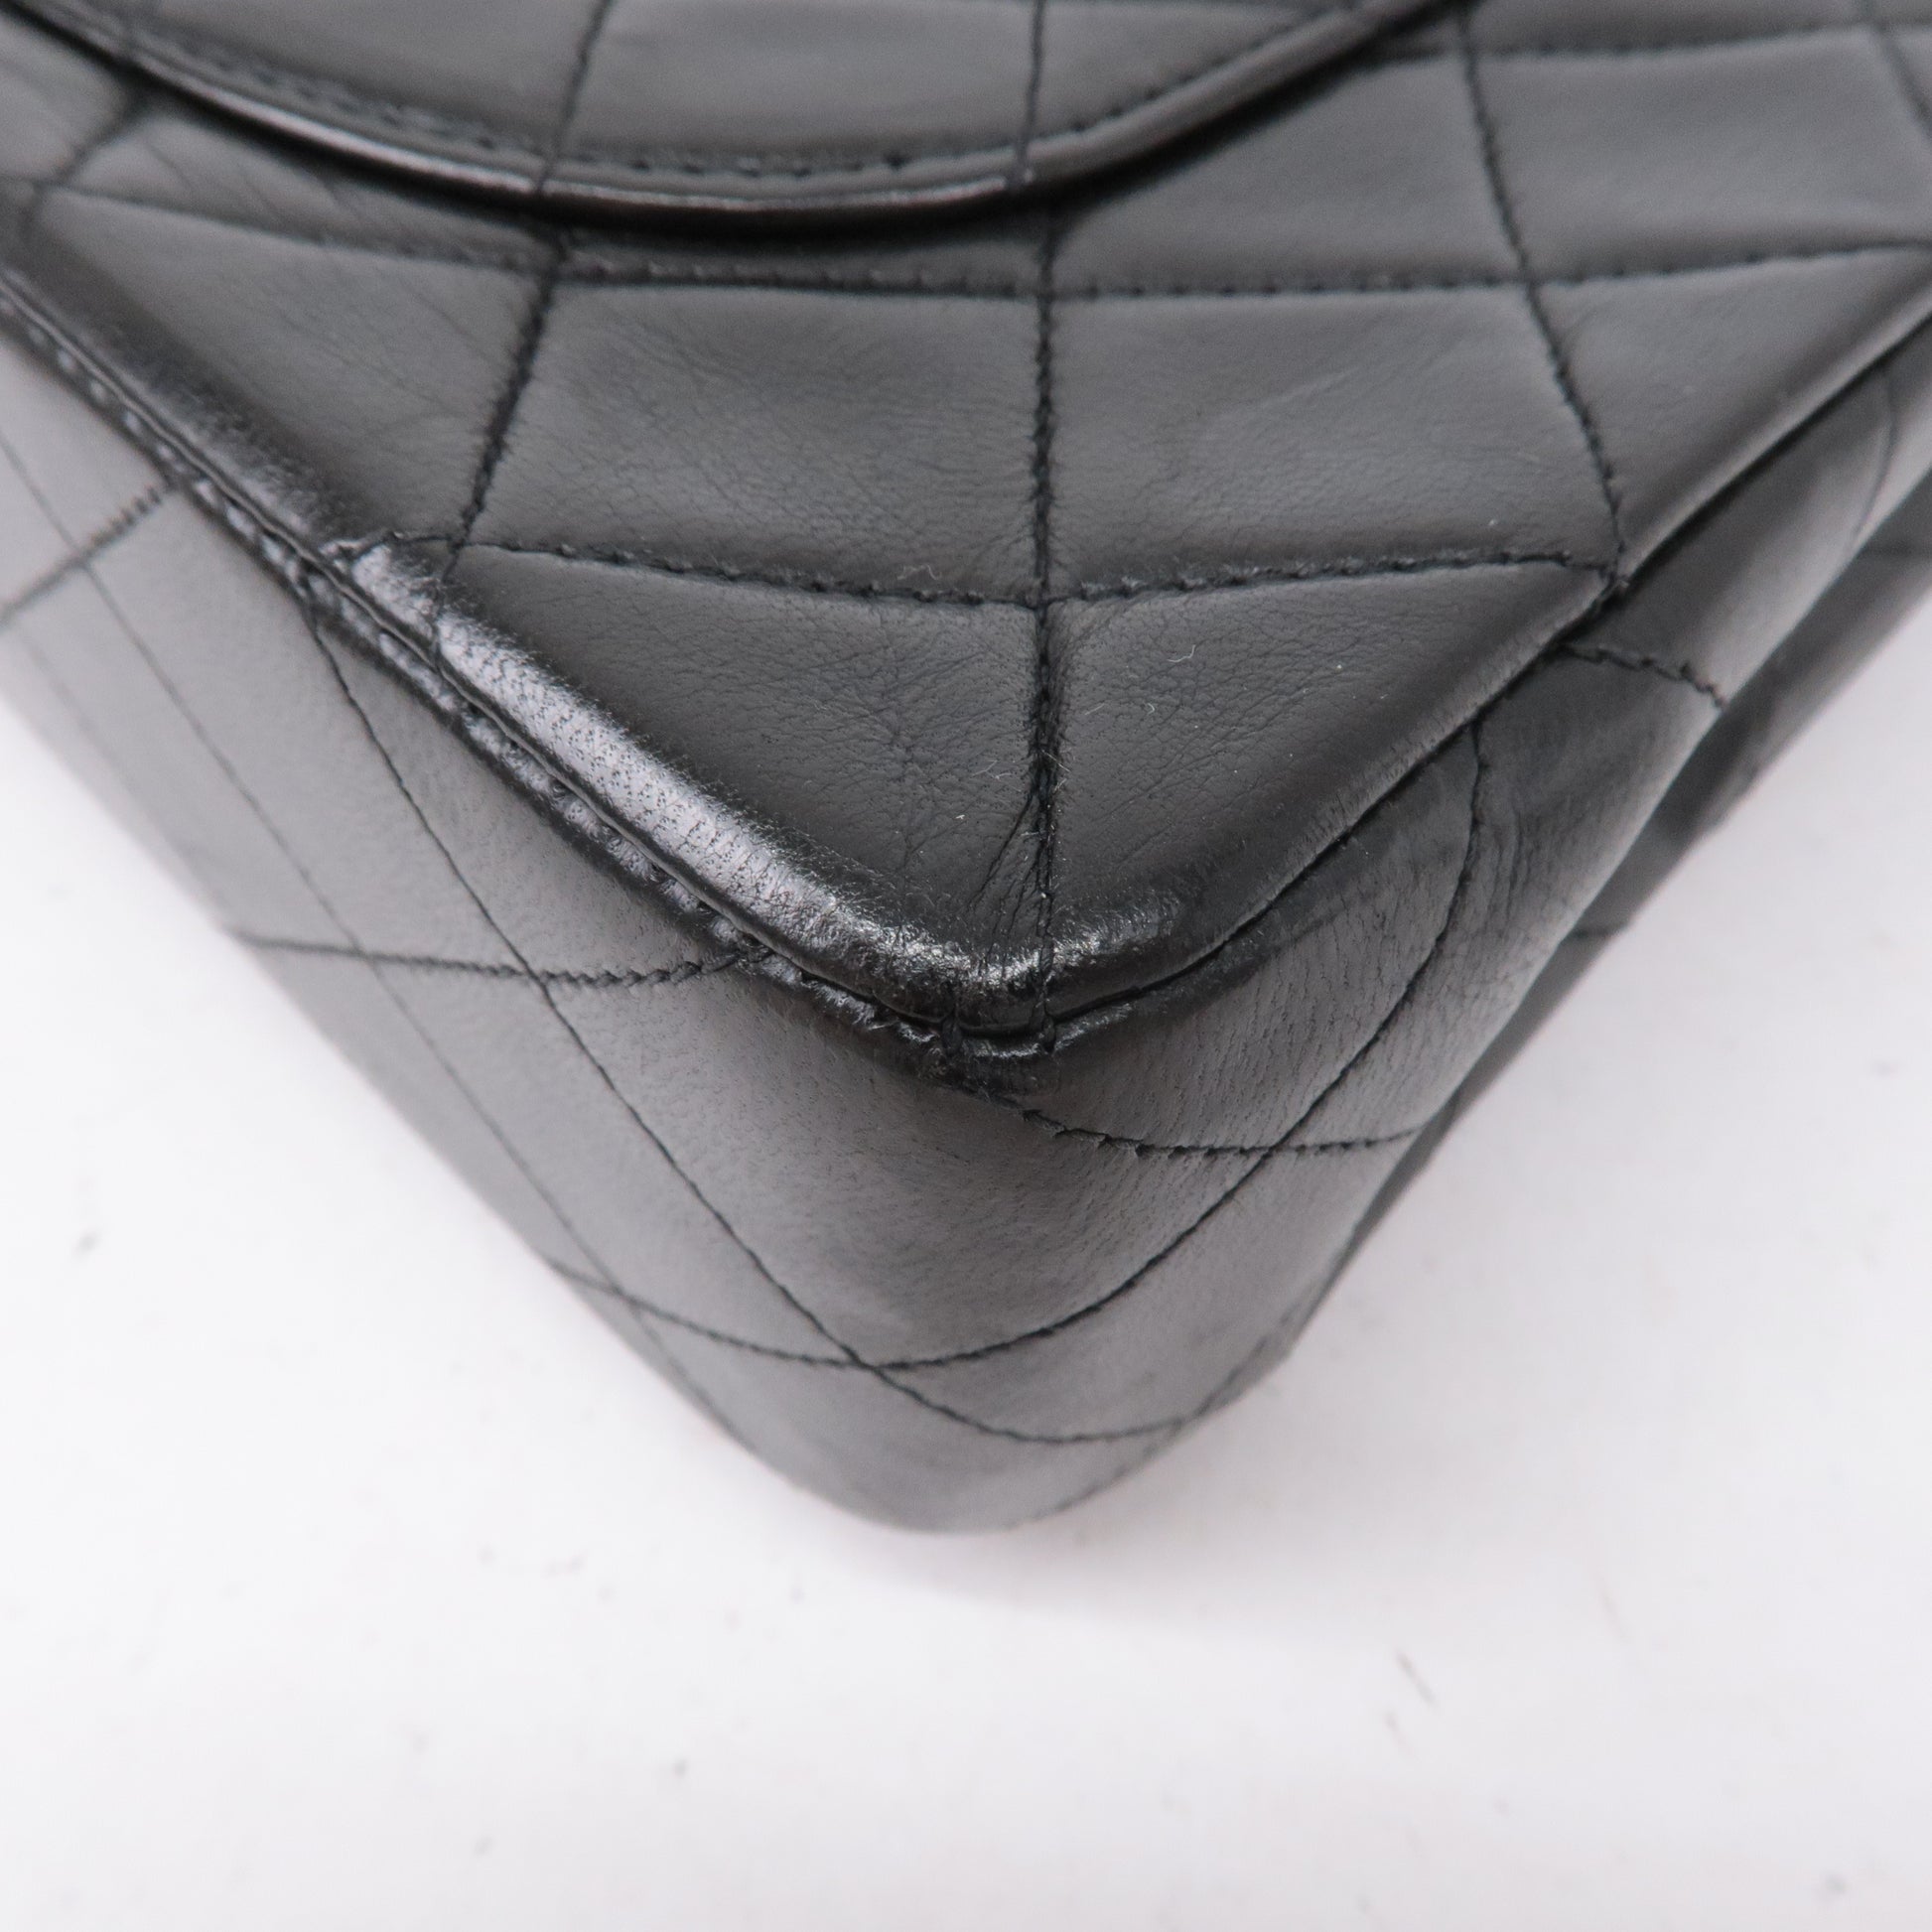 Chanel Classic Double Flap Black Napa Leather 23cm 24K GPHW Bag 1997-99